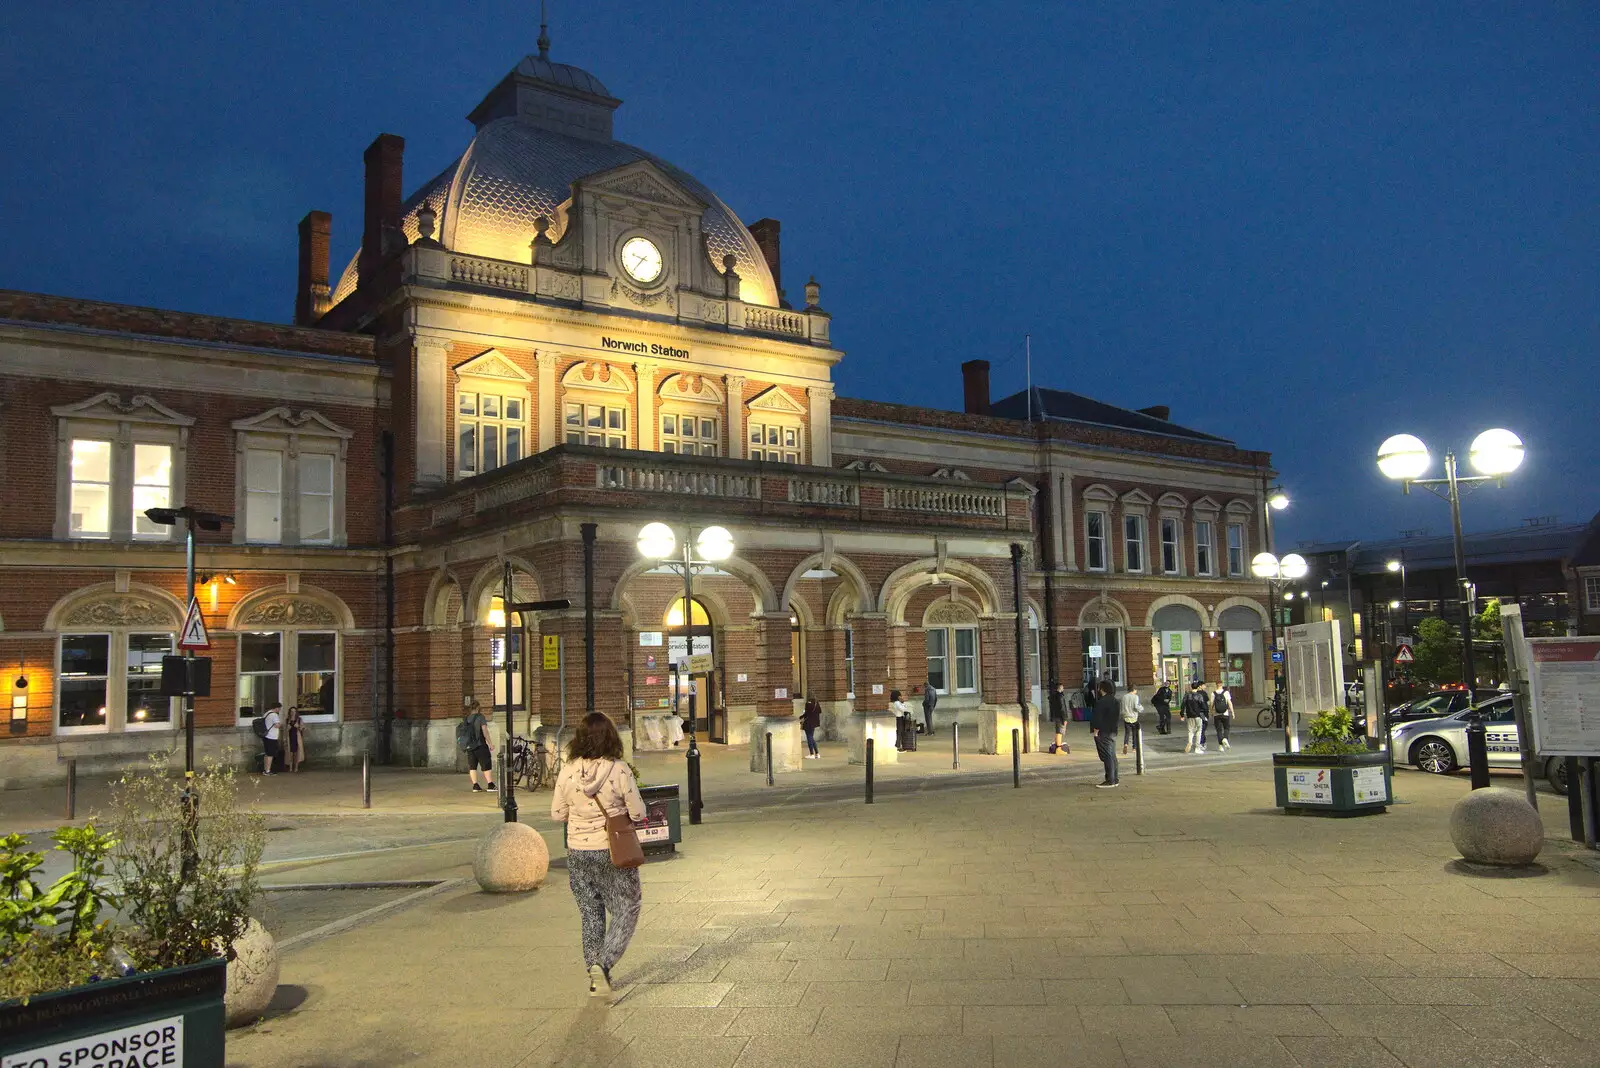 Norwich railway station, from A Trip to Nando's, Riverside, Norwich, Norfolk - 23rd July 2021